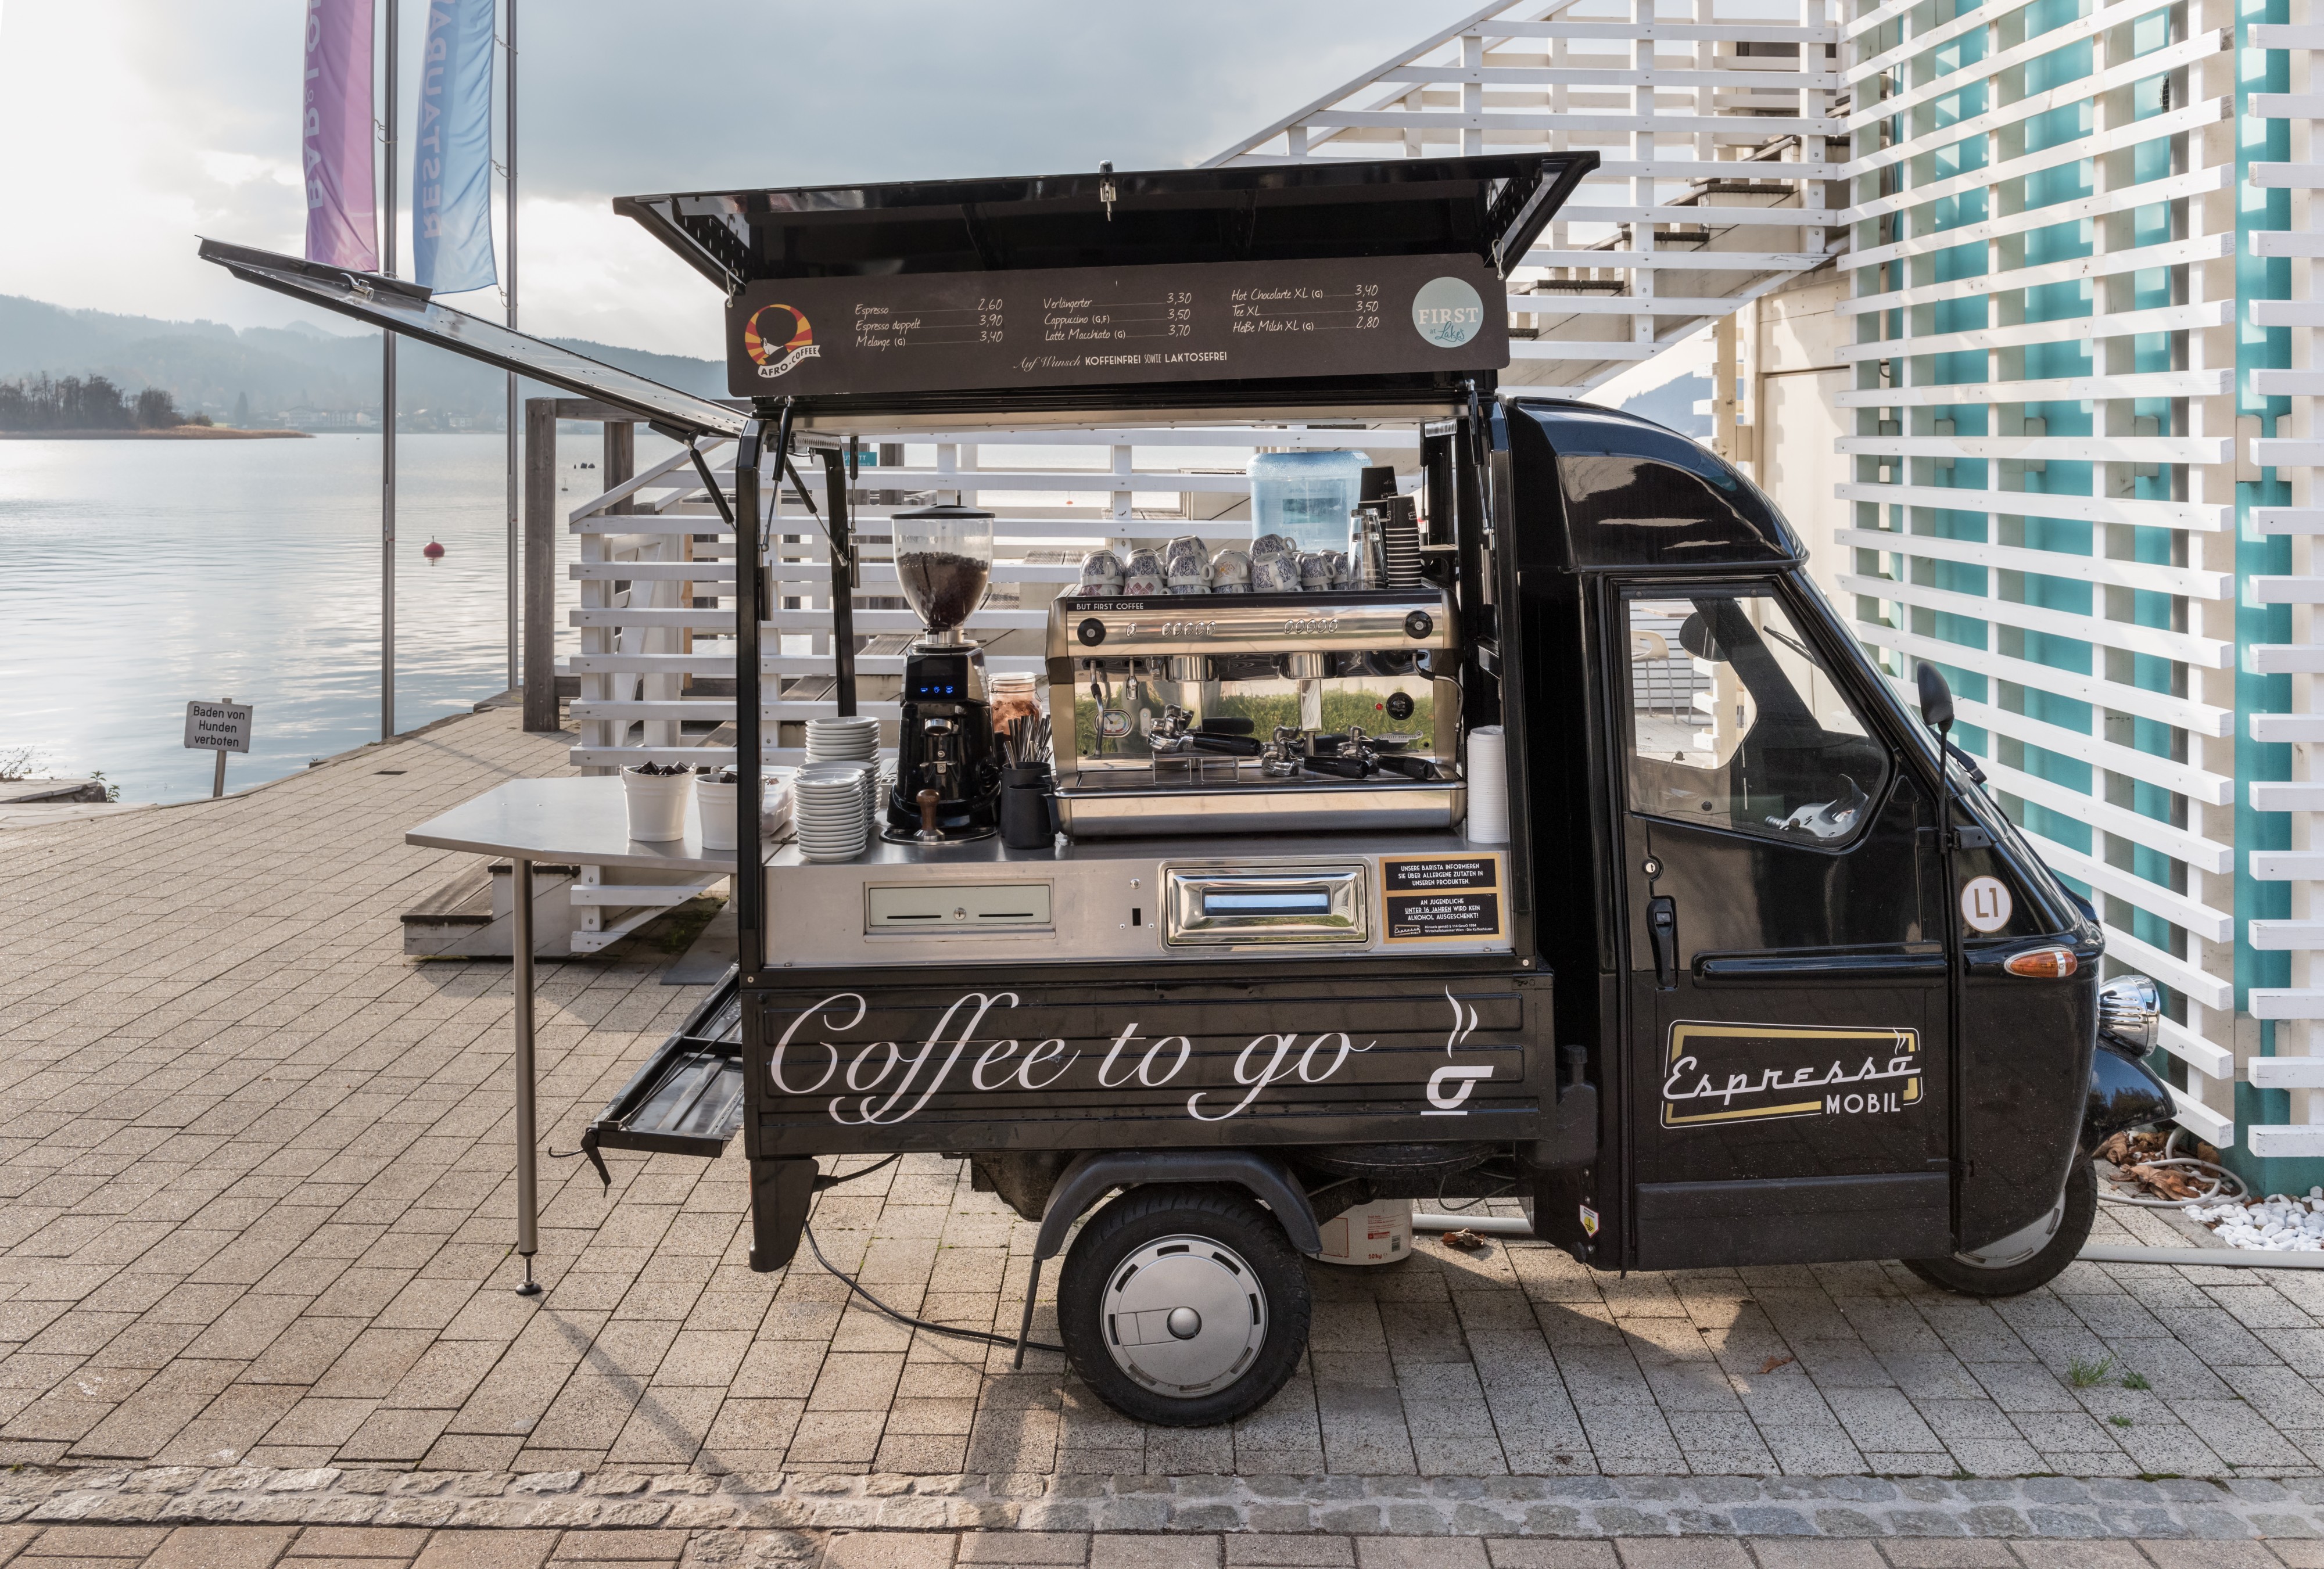 Pörtschach Johannes-Brahms-Promenade Lakes Espresso mobil Coffee to go 16112018 5352